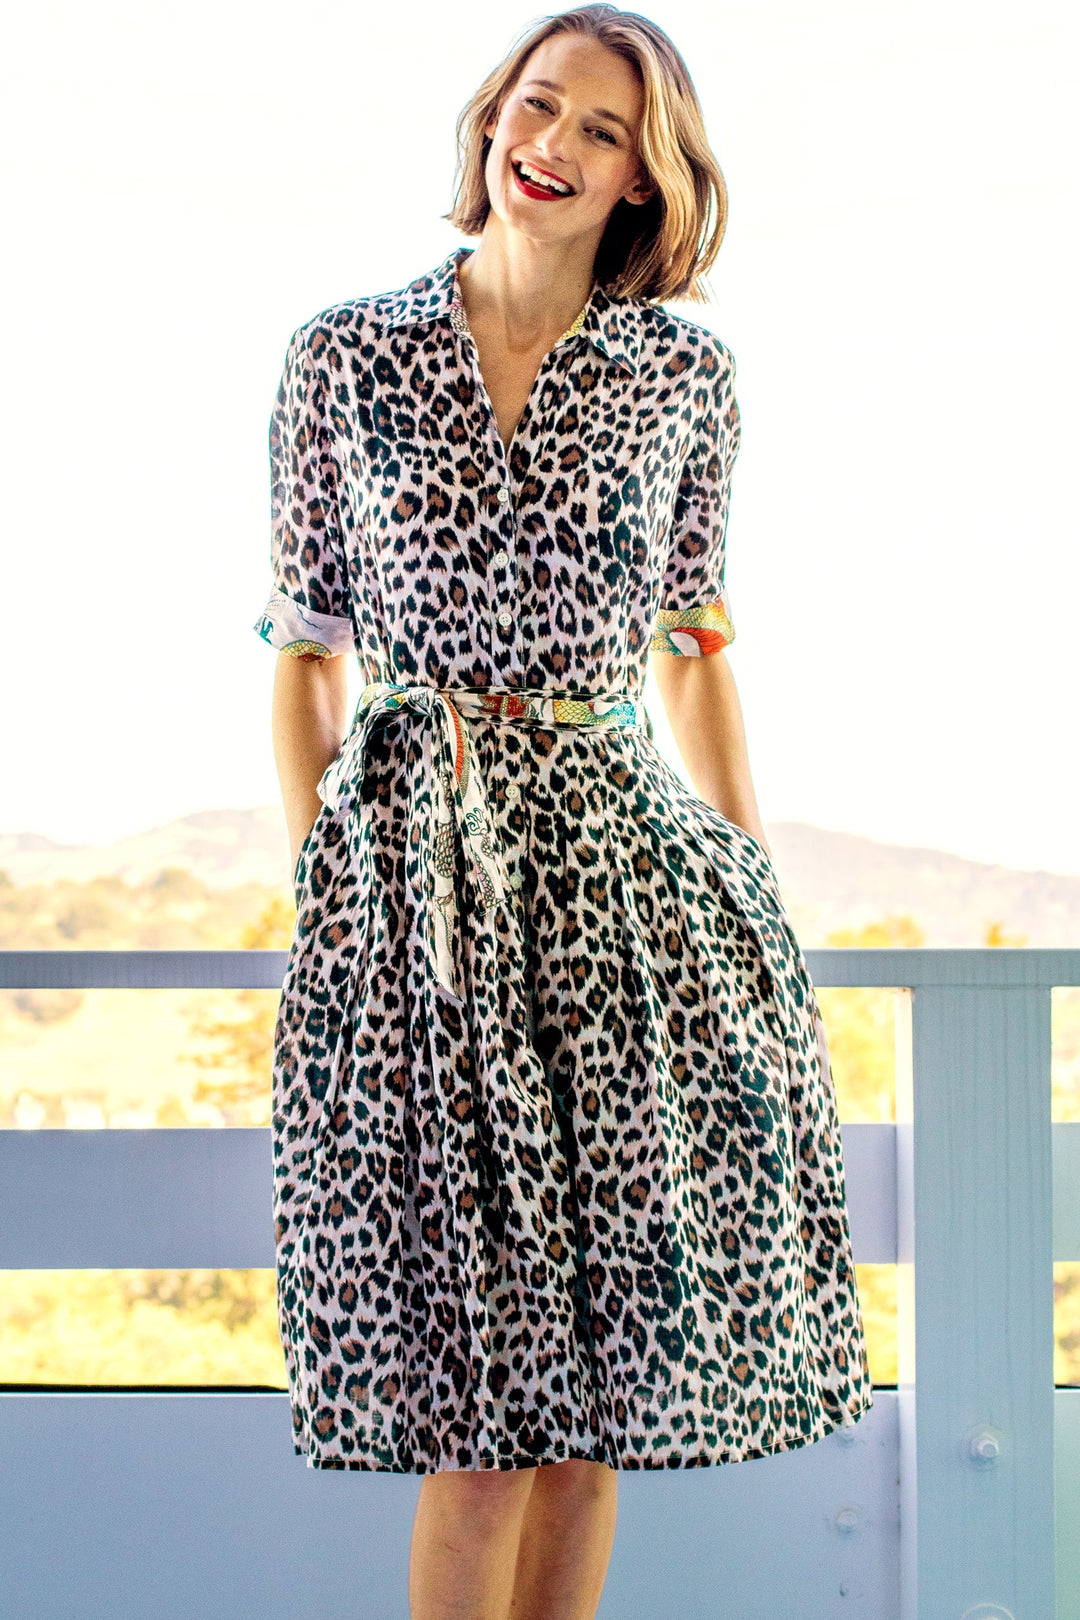 Dizzy-Lizzie Mrs. Maisel Dress Cheetah Print